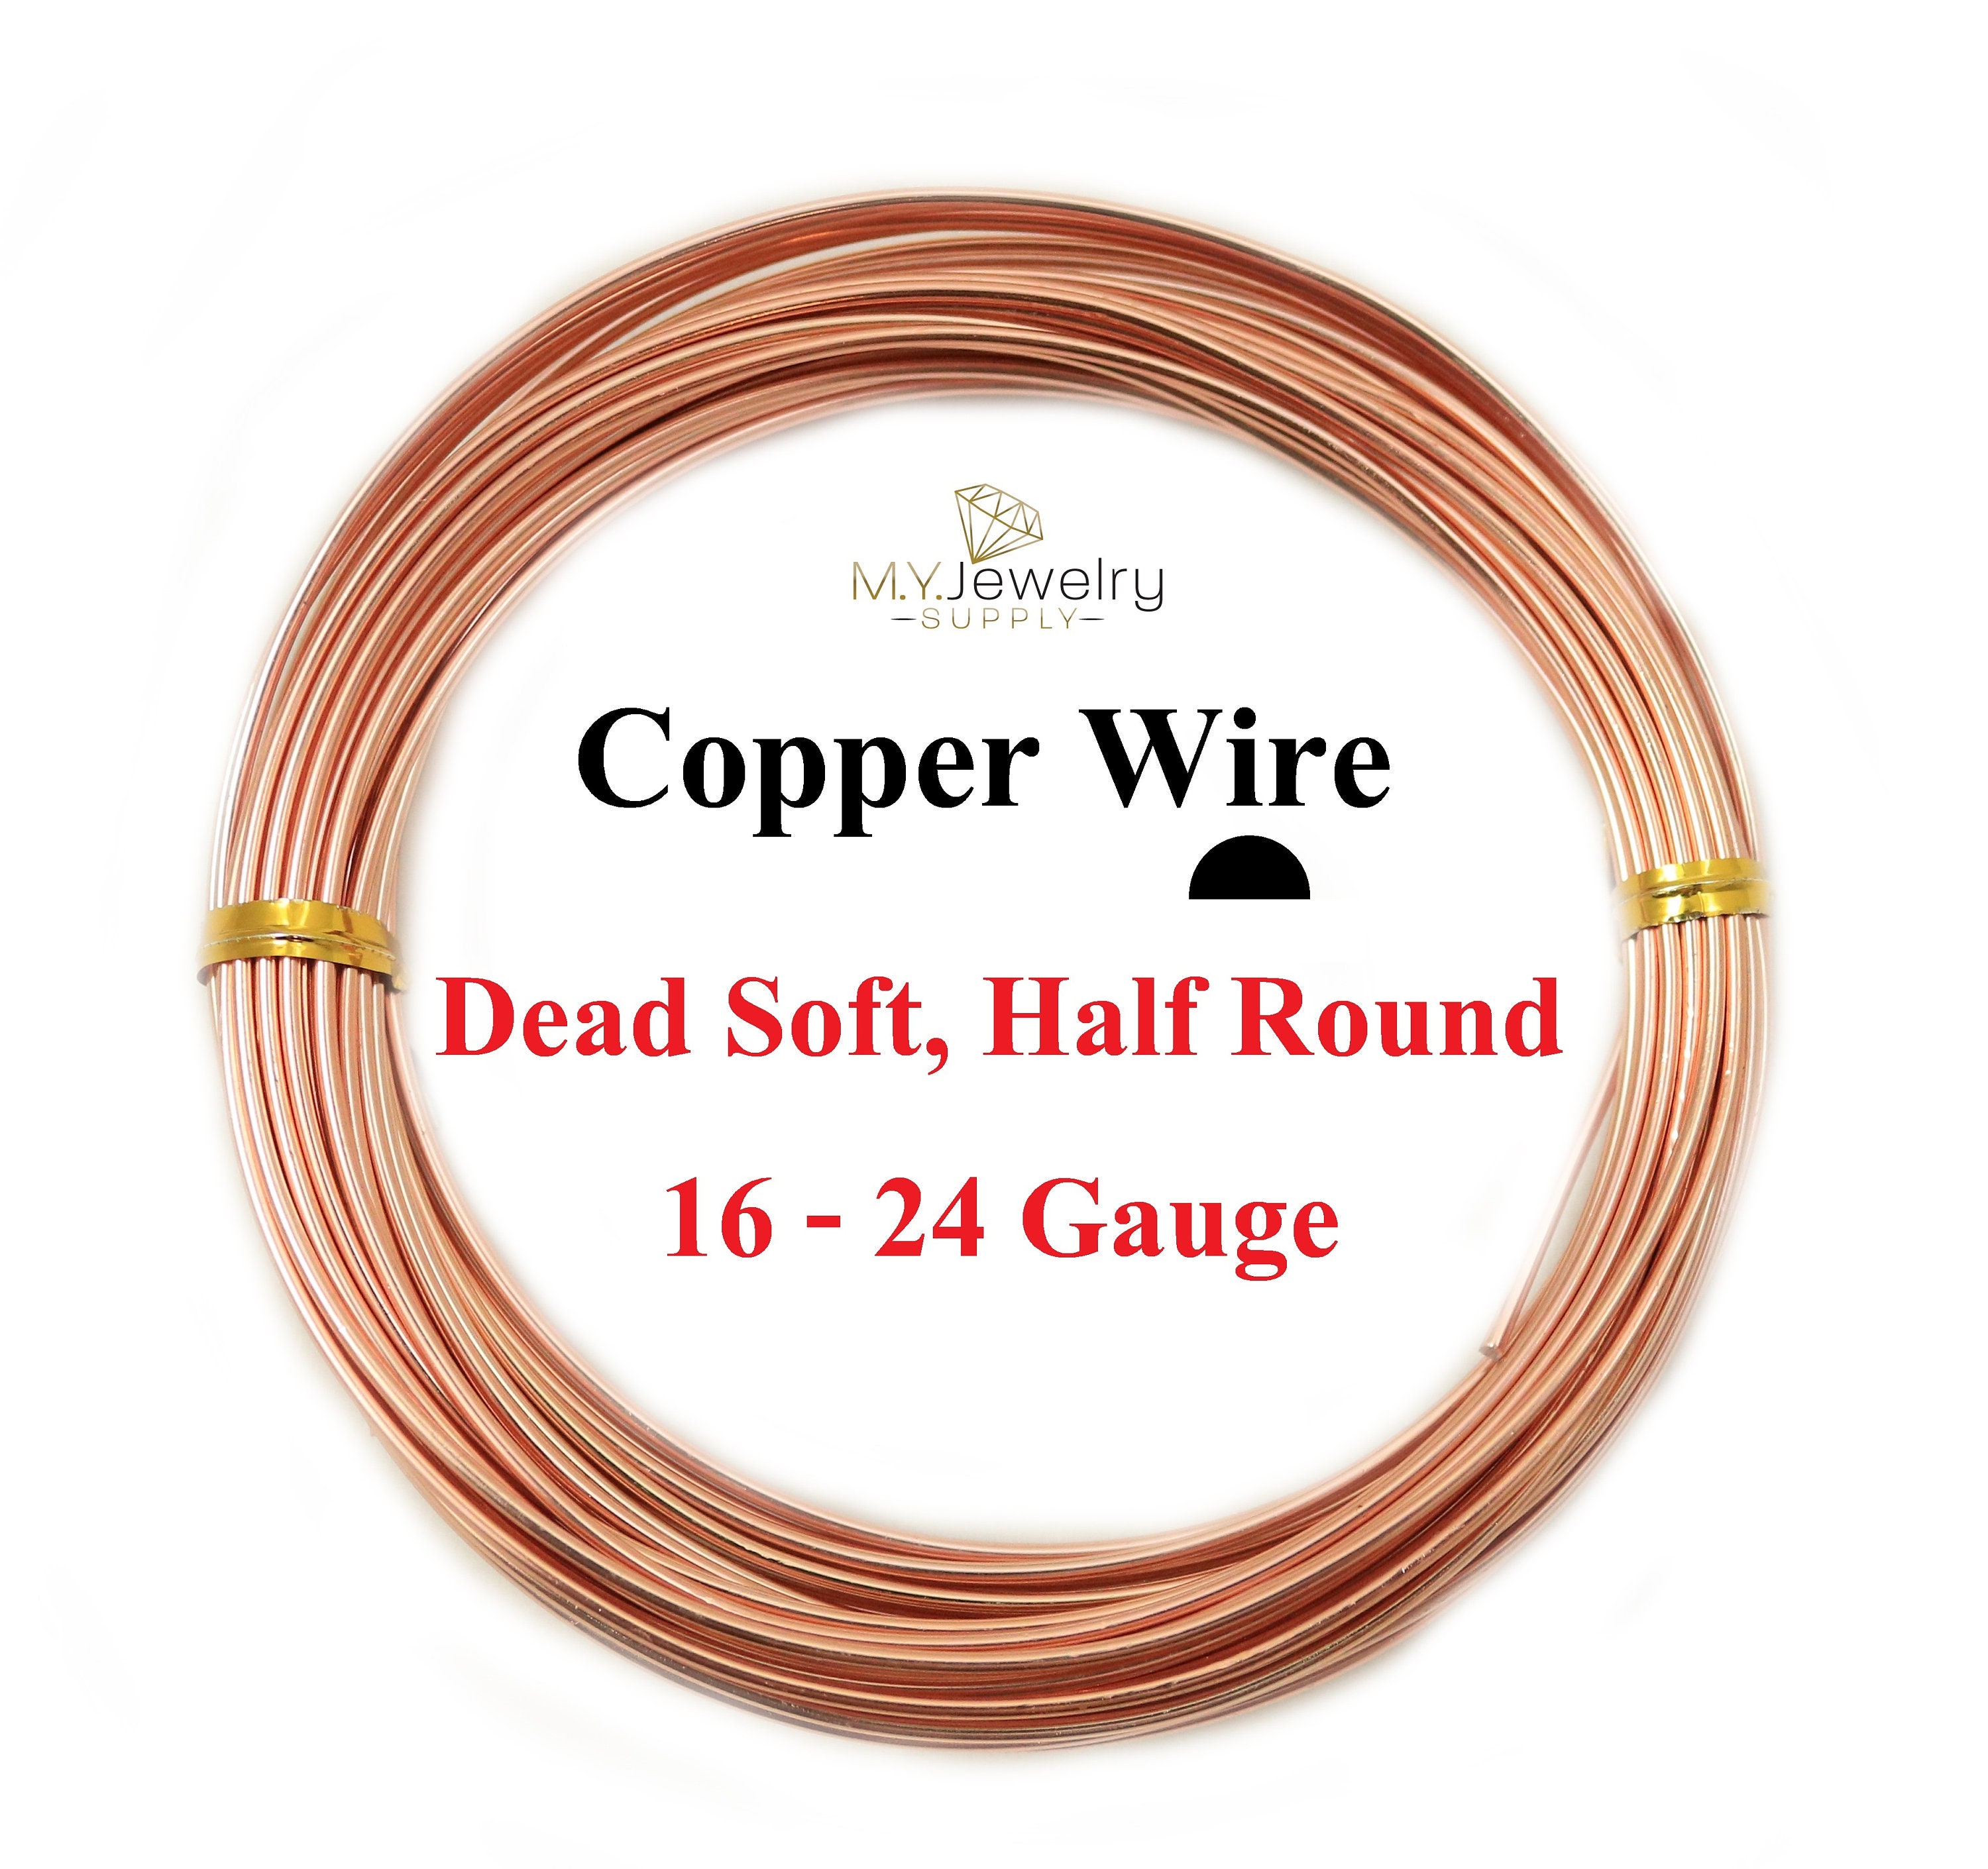 12 Gauge, 99.9% Pure Copper Wire (Square) Dead Soft CDA #110 Made in USA -  10FT